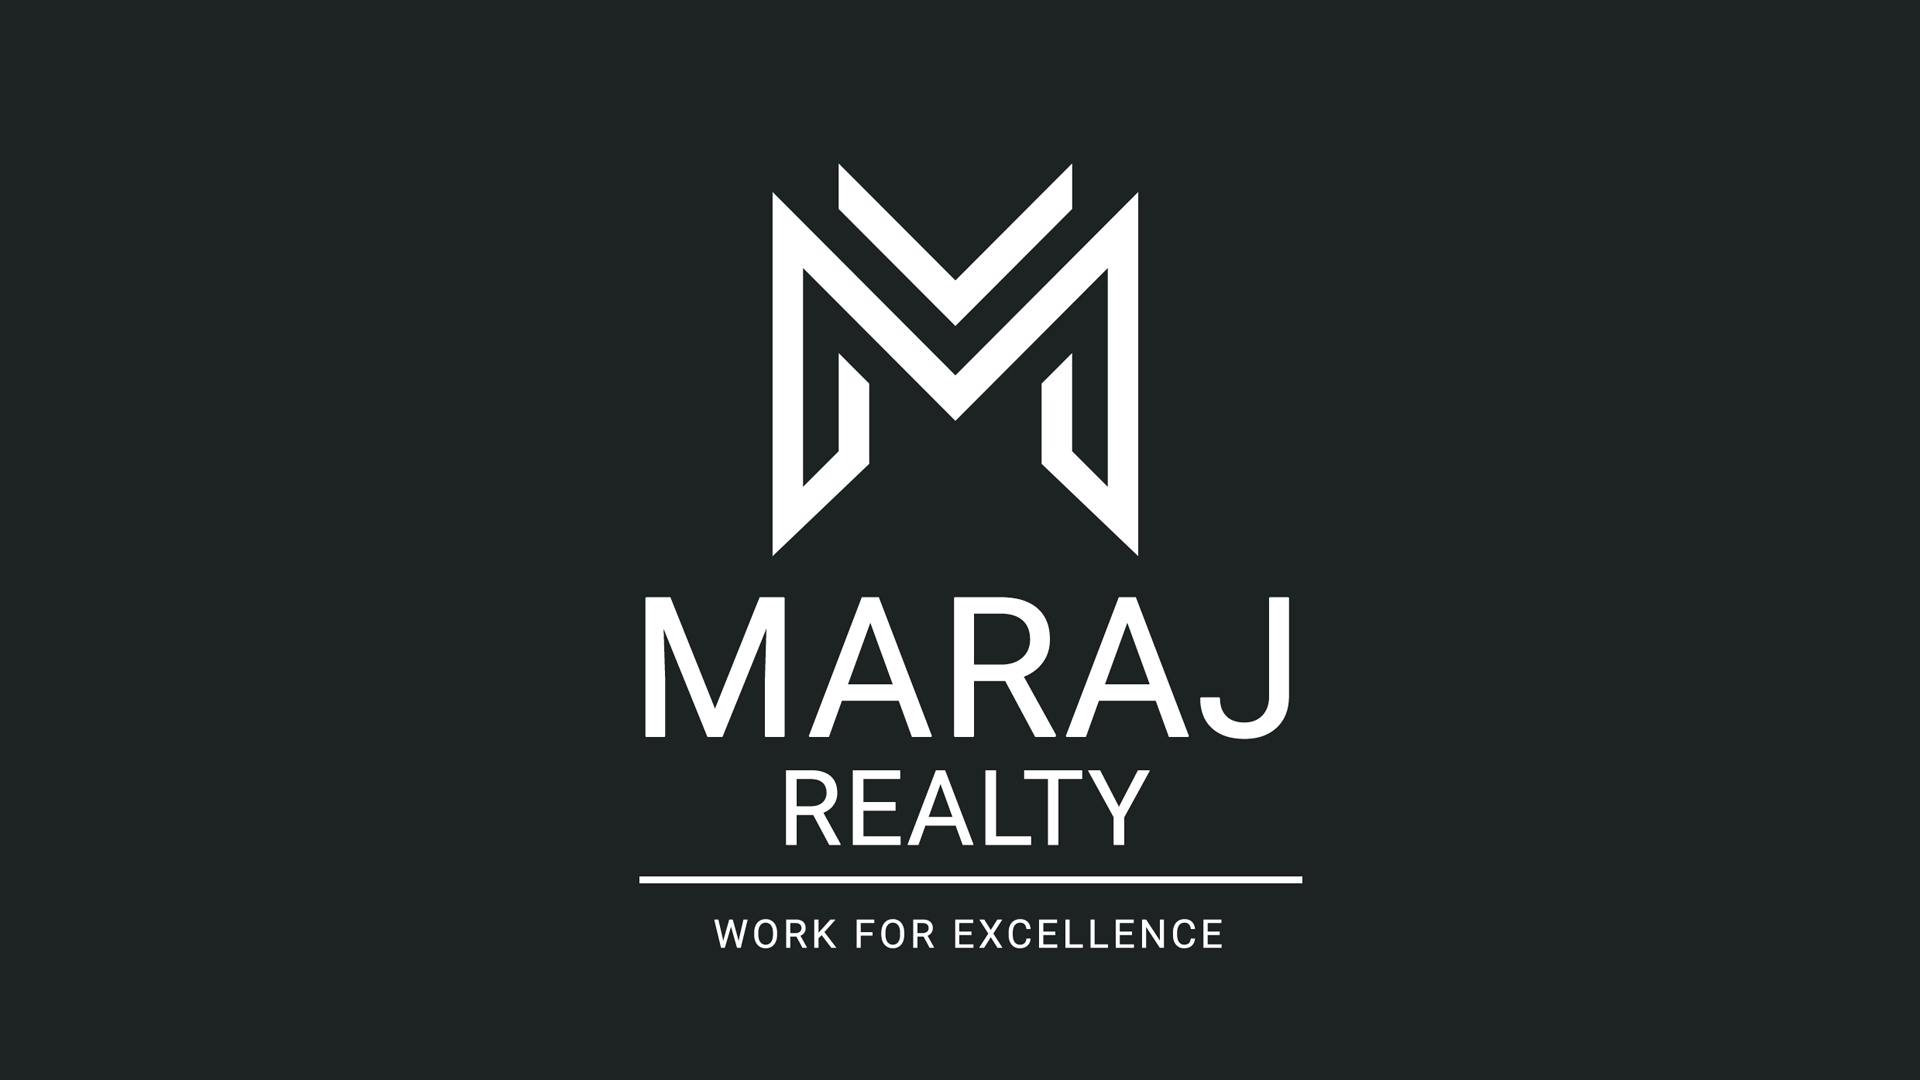 Maraj Realty, Maraj Property, Maraj Plots, Maraj Resort real estate, maraj Resort property in noida, Maraj Realty, India's Largest Real Estate Company, Best Real Estate Company, Best Property Consultant, Real Estate Company, India's Best Real Estate Consultant, Best Property Dealers, Property Websites, Real Estate Website, Jewar Plot, Noida Plot, Plot in Tappal, Plot in Jewar, Plot near Jewar Airport